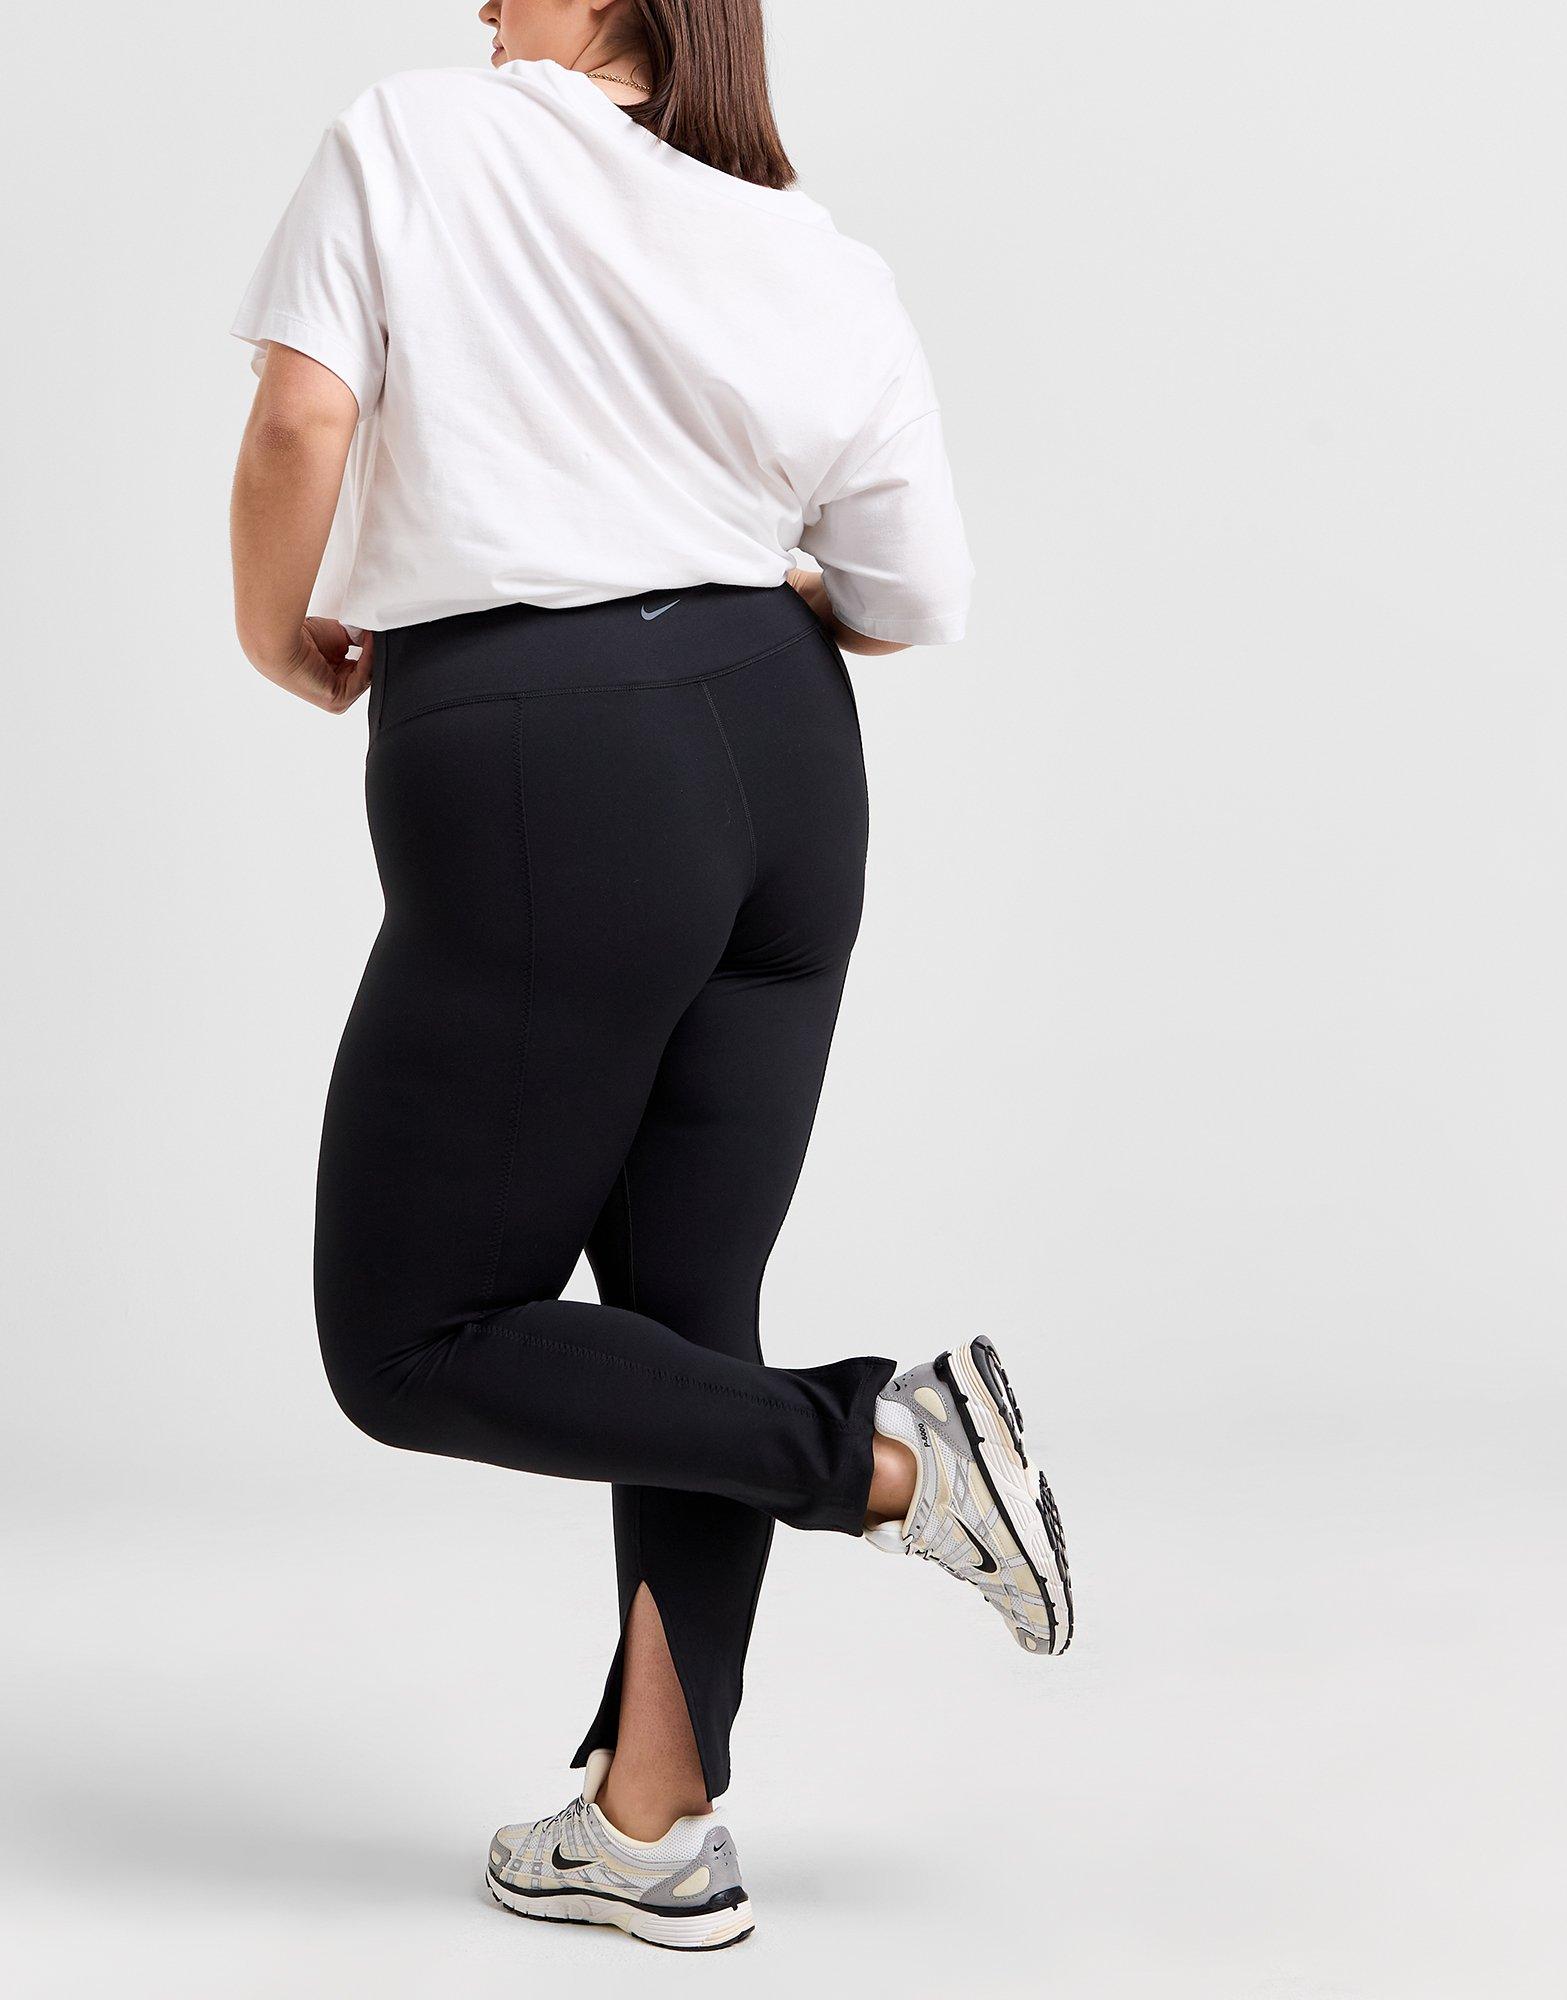 Lululemon Leggings Black Sport Pockets Side and Zip Back Size 4 Inseam  23.5”